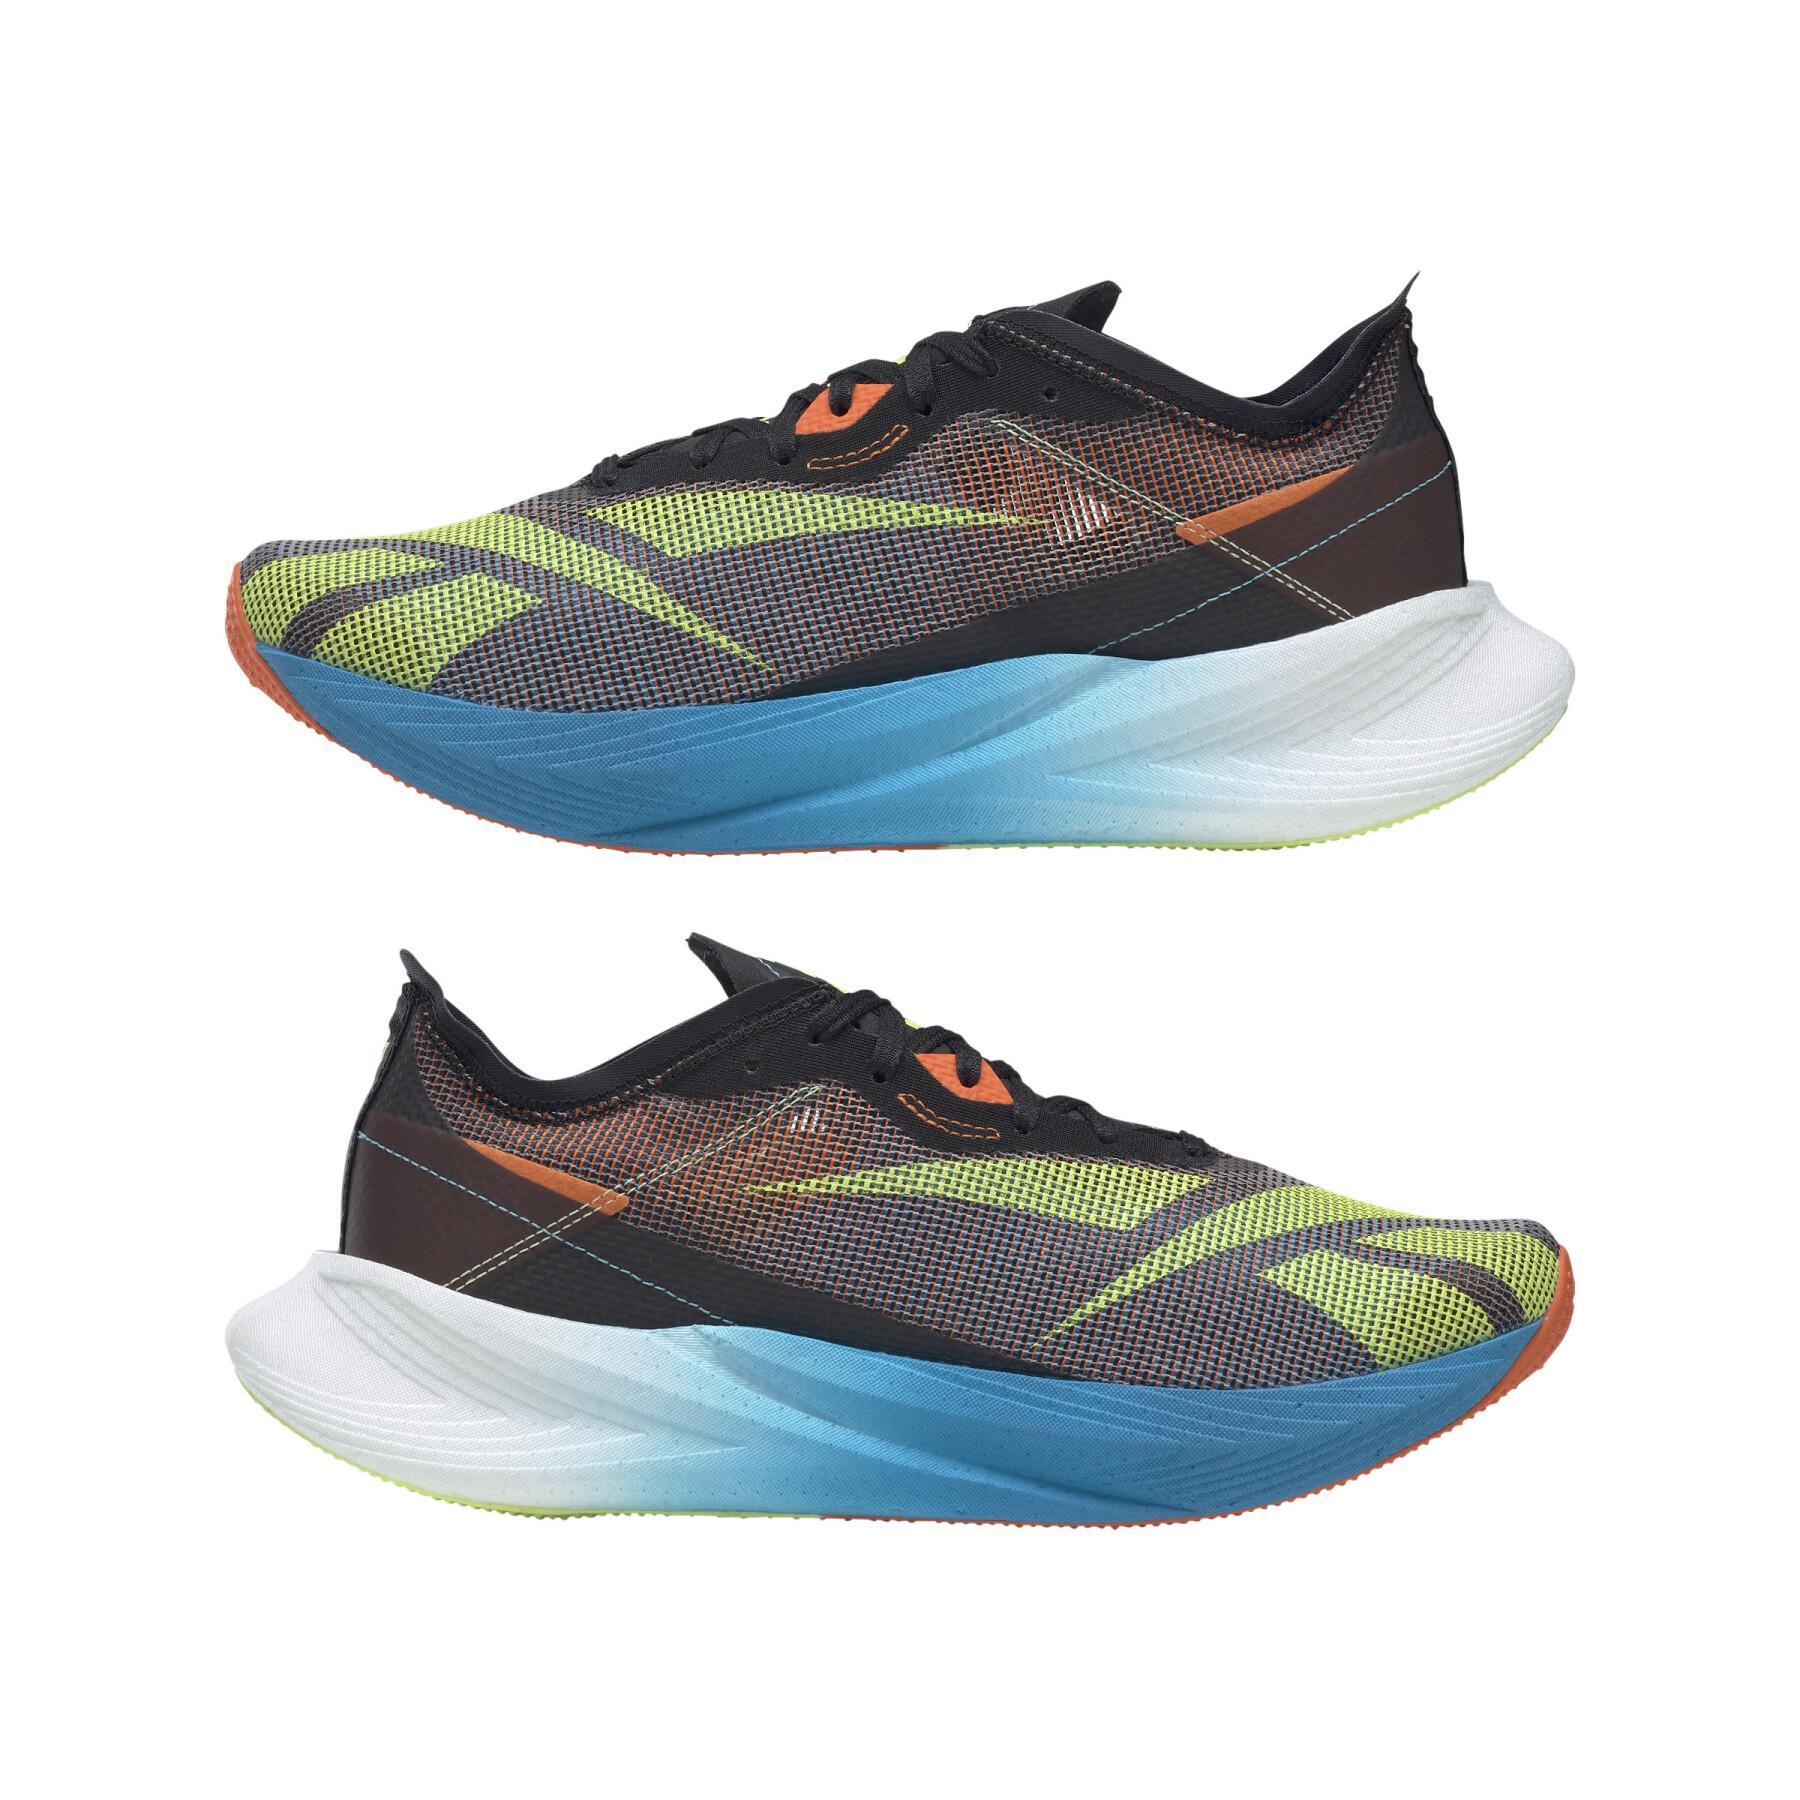 Running shoes Reebok Floatride Energy X